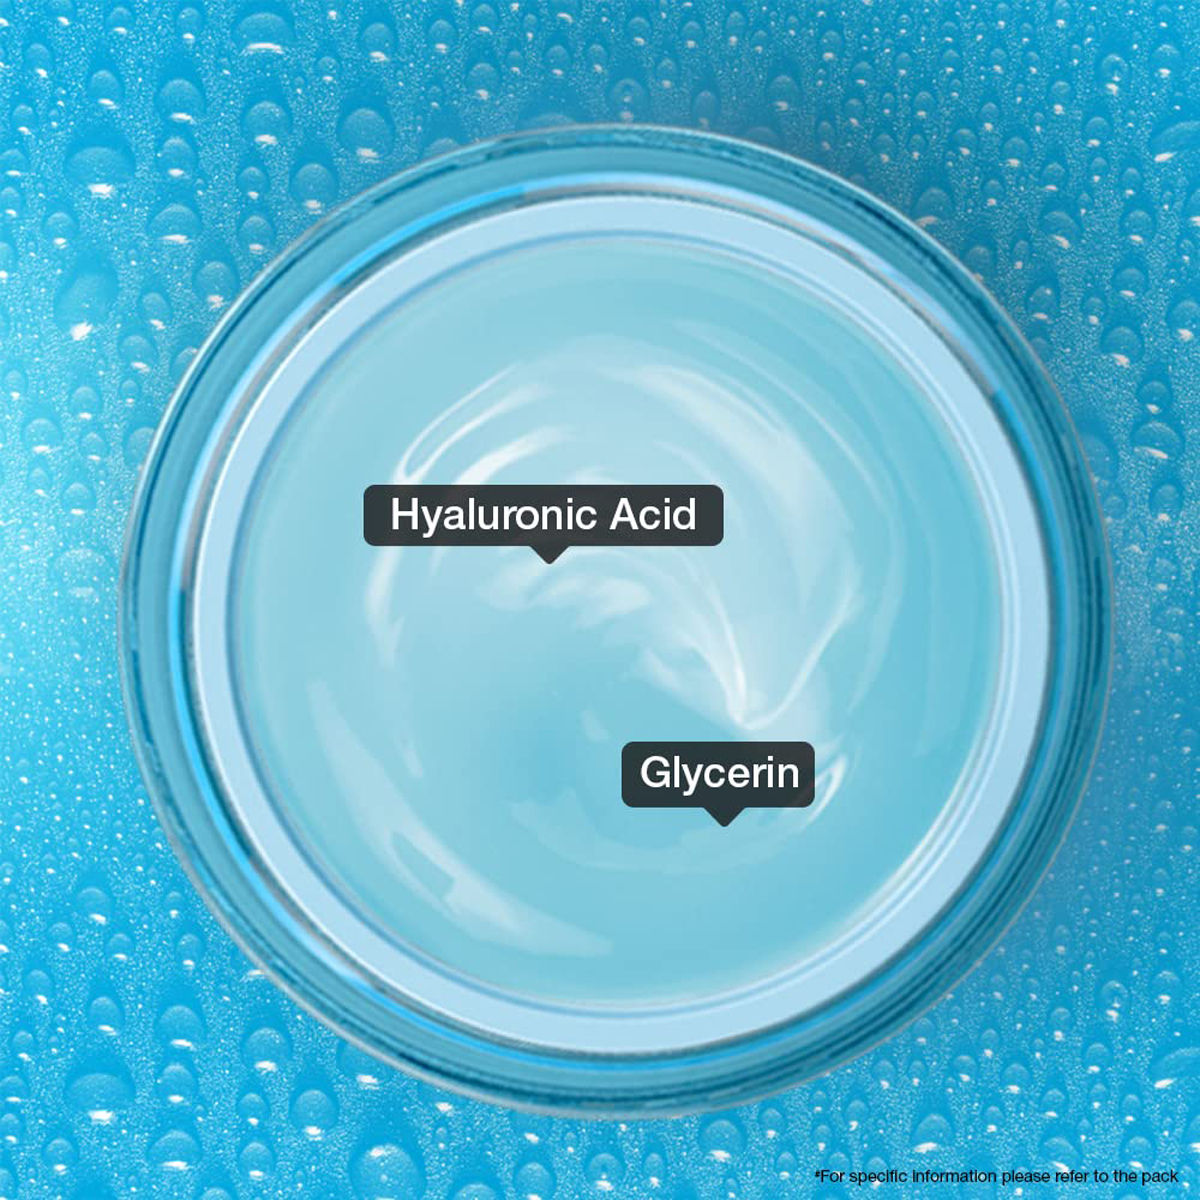 Neutrogena Hydro Boost Water Gel, 15 gm, Pack of 1 